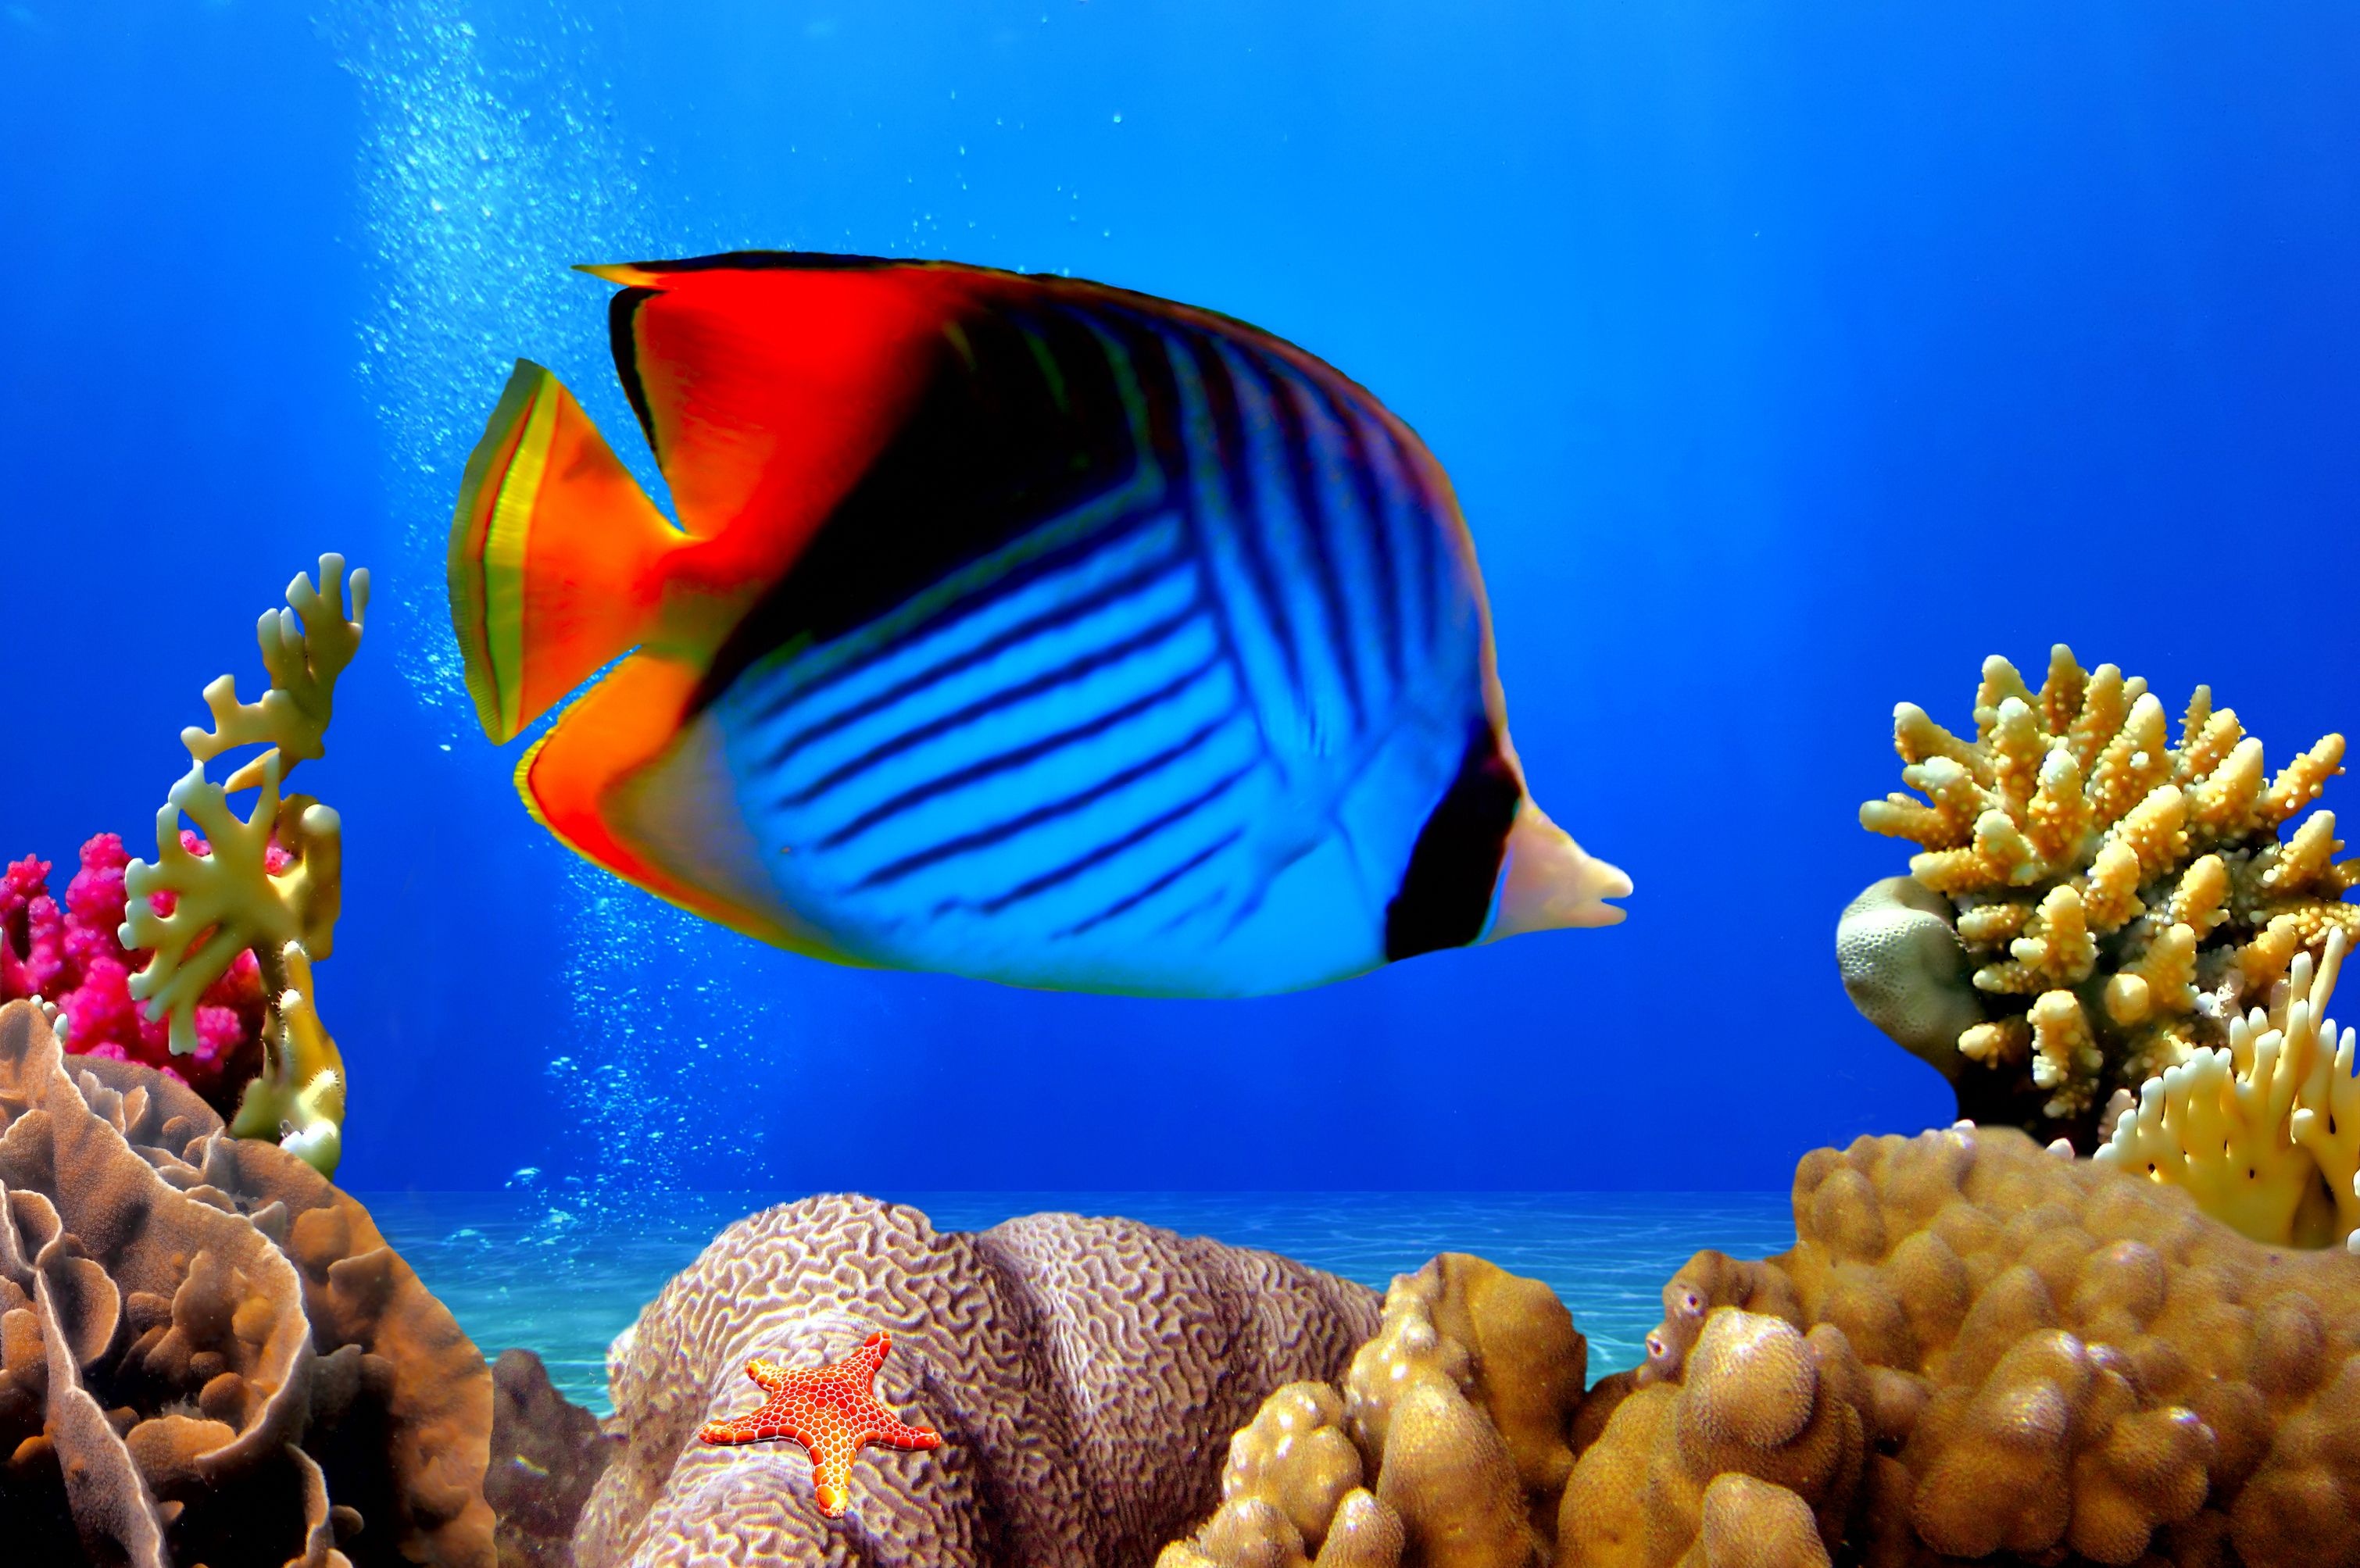 Tropical coral reef wallpaper, Underwater ocean scene, Colorful fish, Underwater nature, 3020x2010 HD Desktop